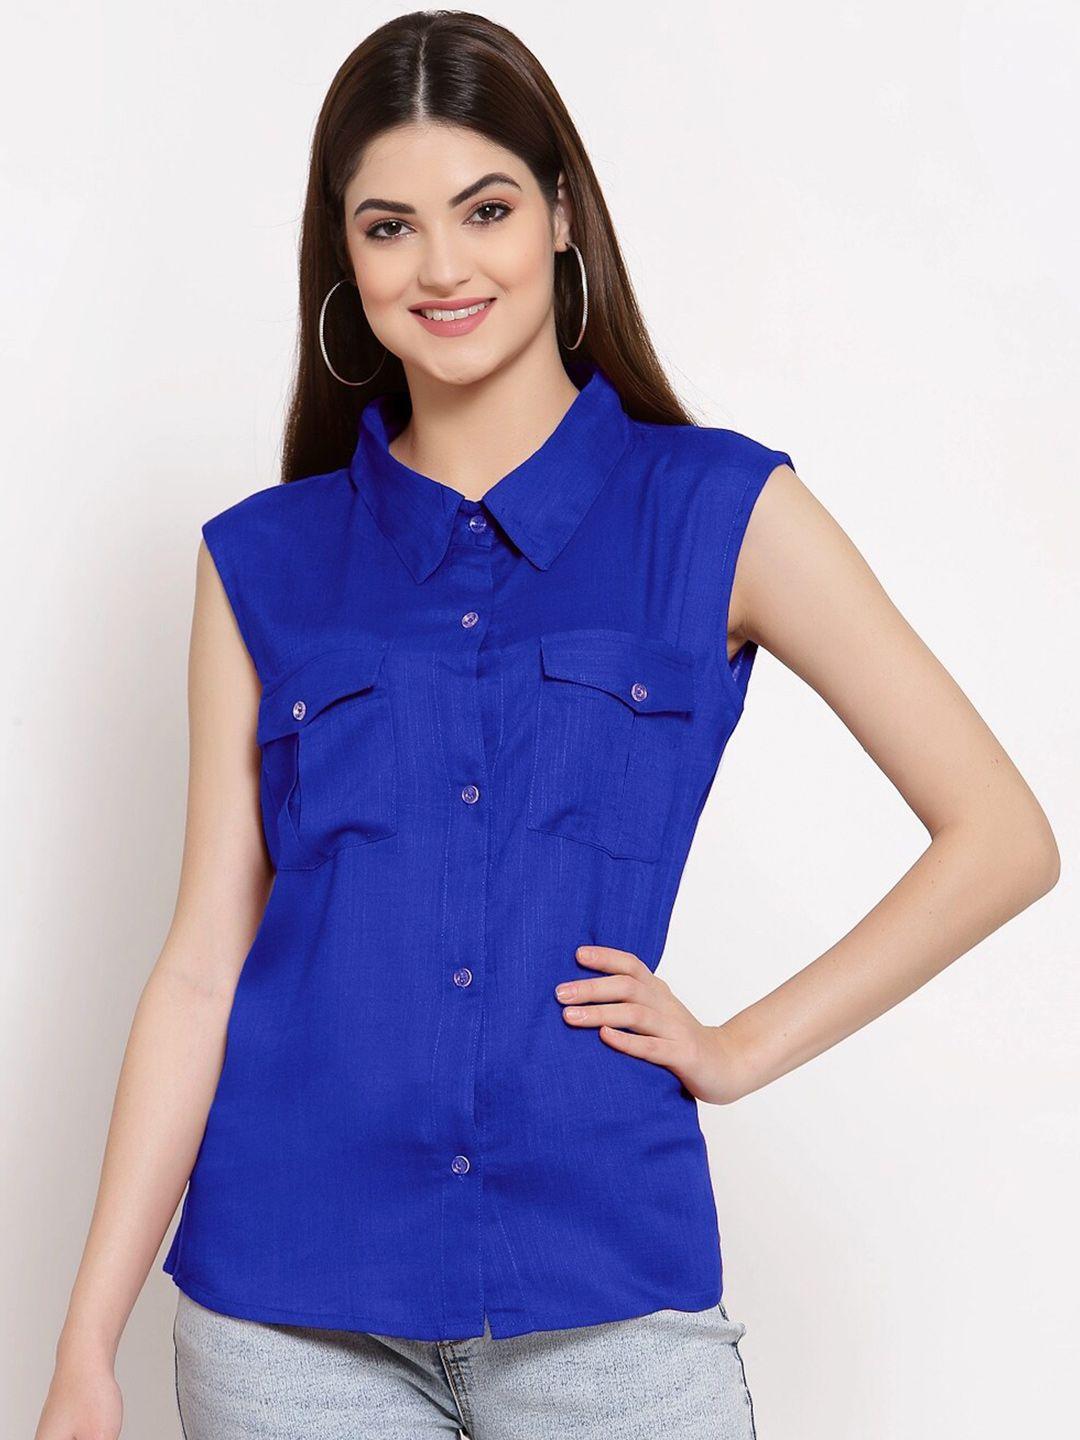 patrorna-plus-size-women-blue-comfort-casual-shirt